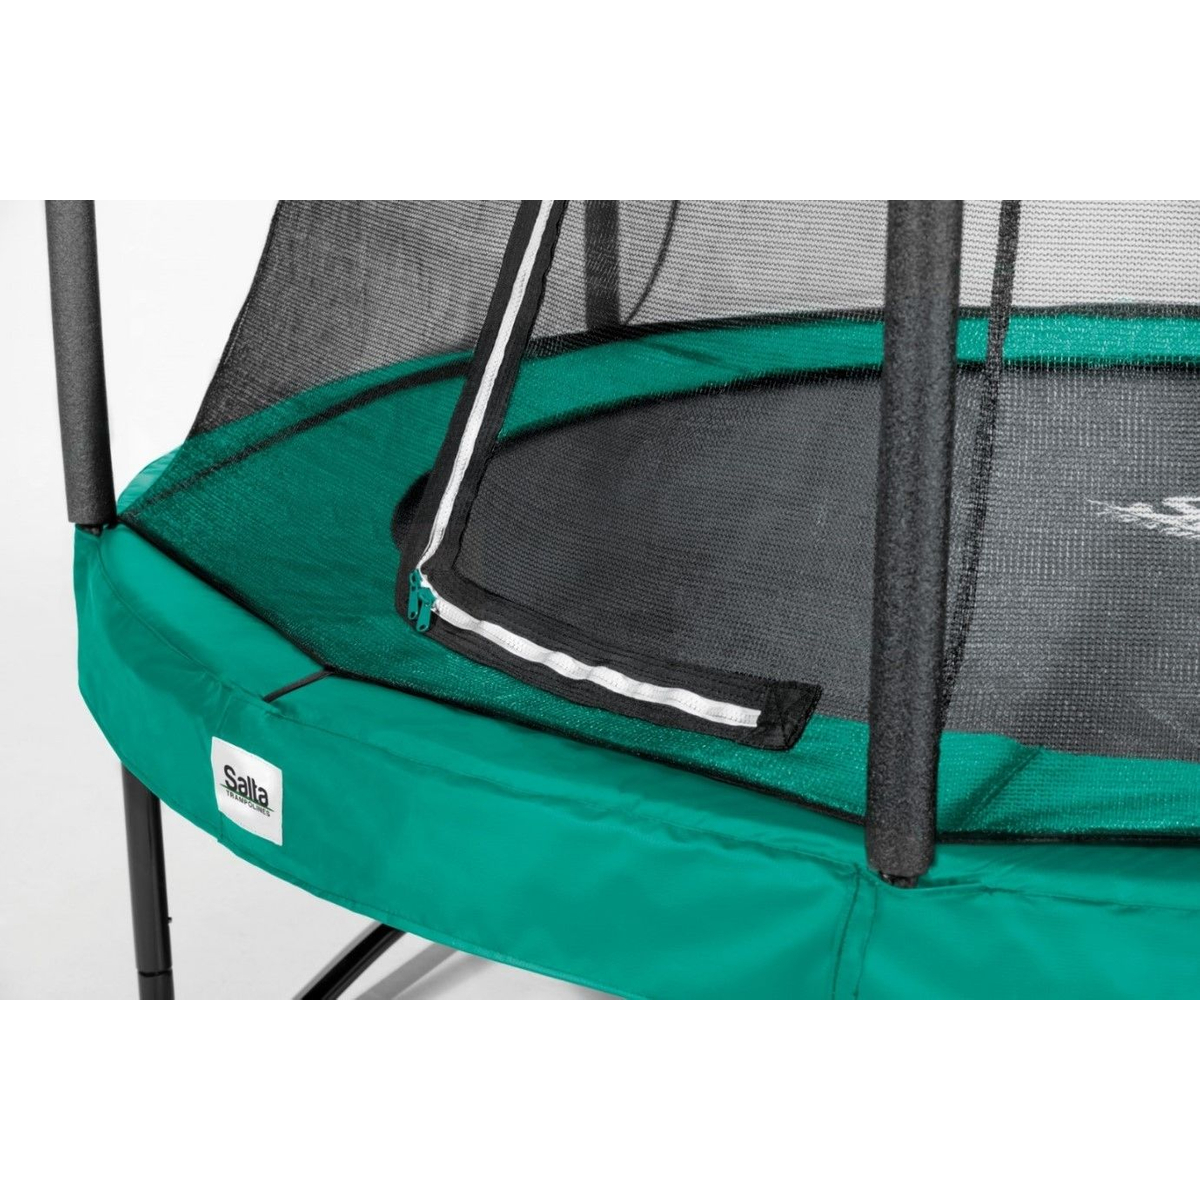 Salta Comfort Edition 427 Groen Trampoline + Veiligheidsnet